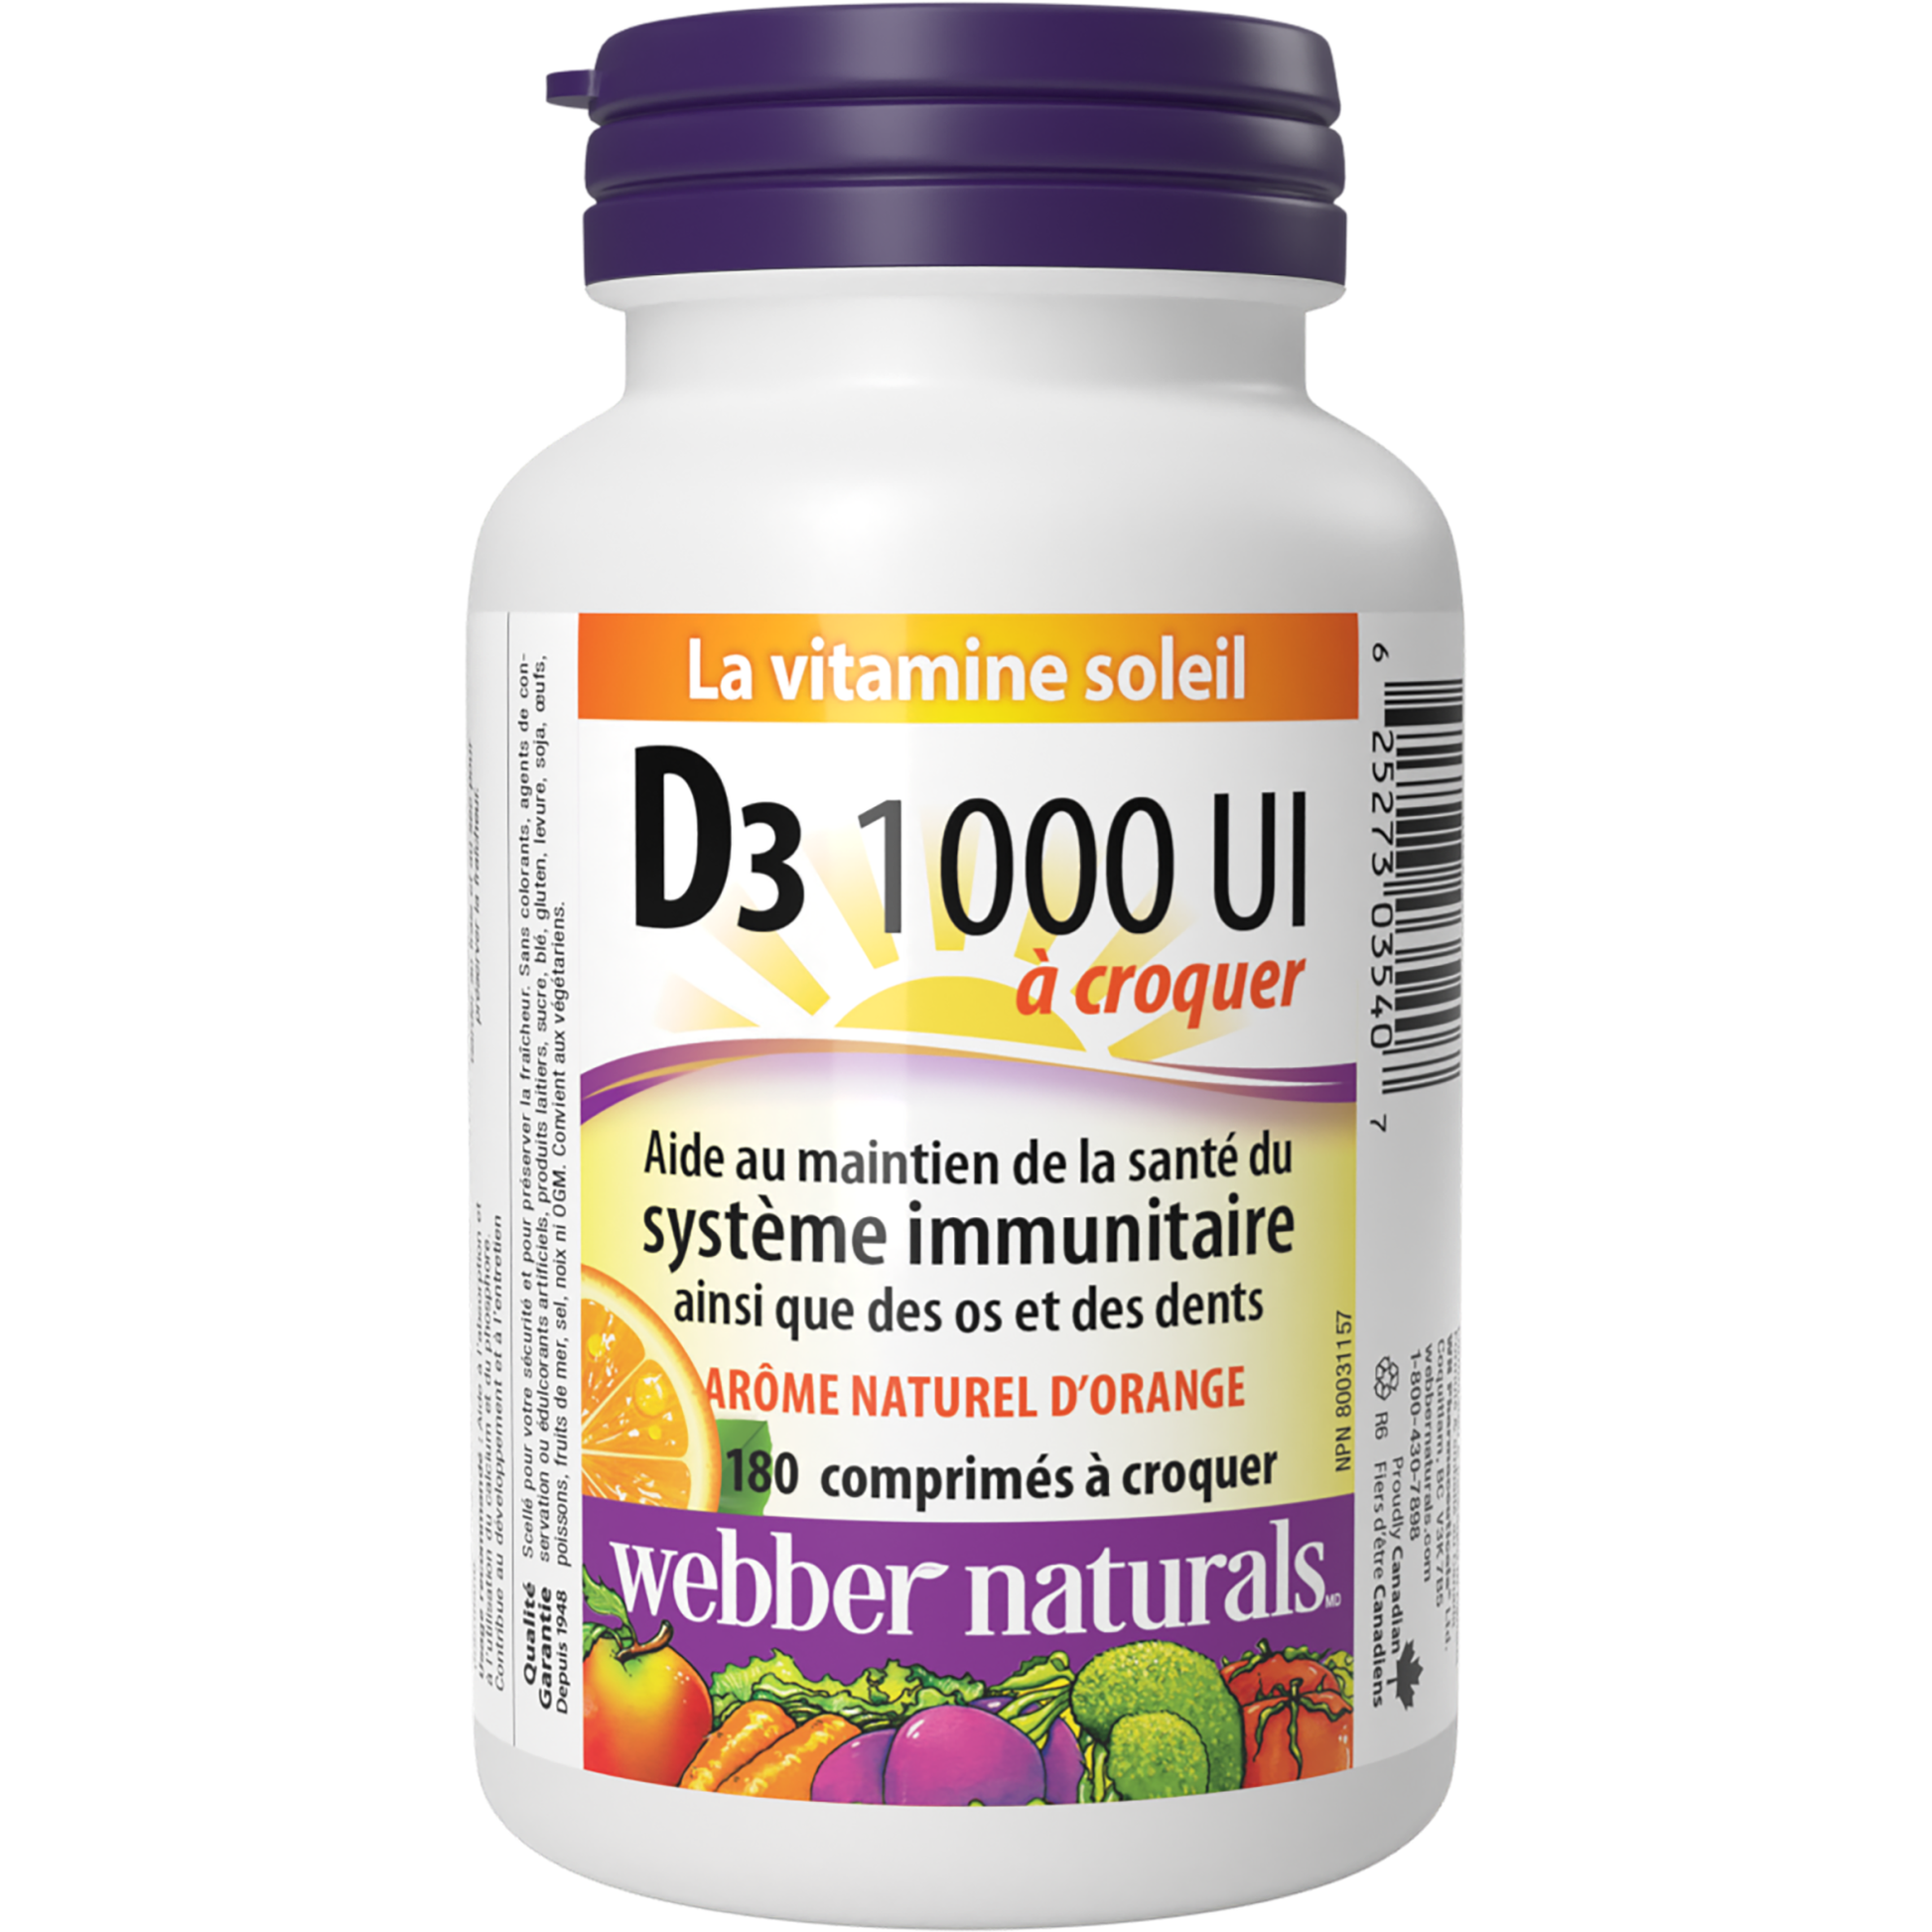 Vitamine D3 à croquer 1 000 UI Arôme naturel d’orange for Webber Naturals|v|hi-res|WN3540